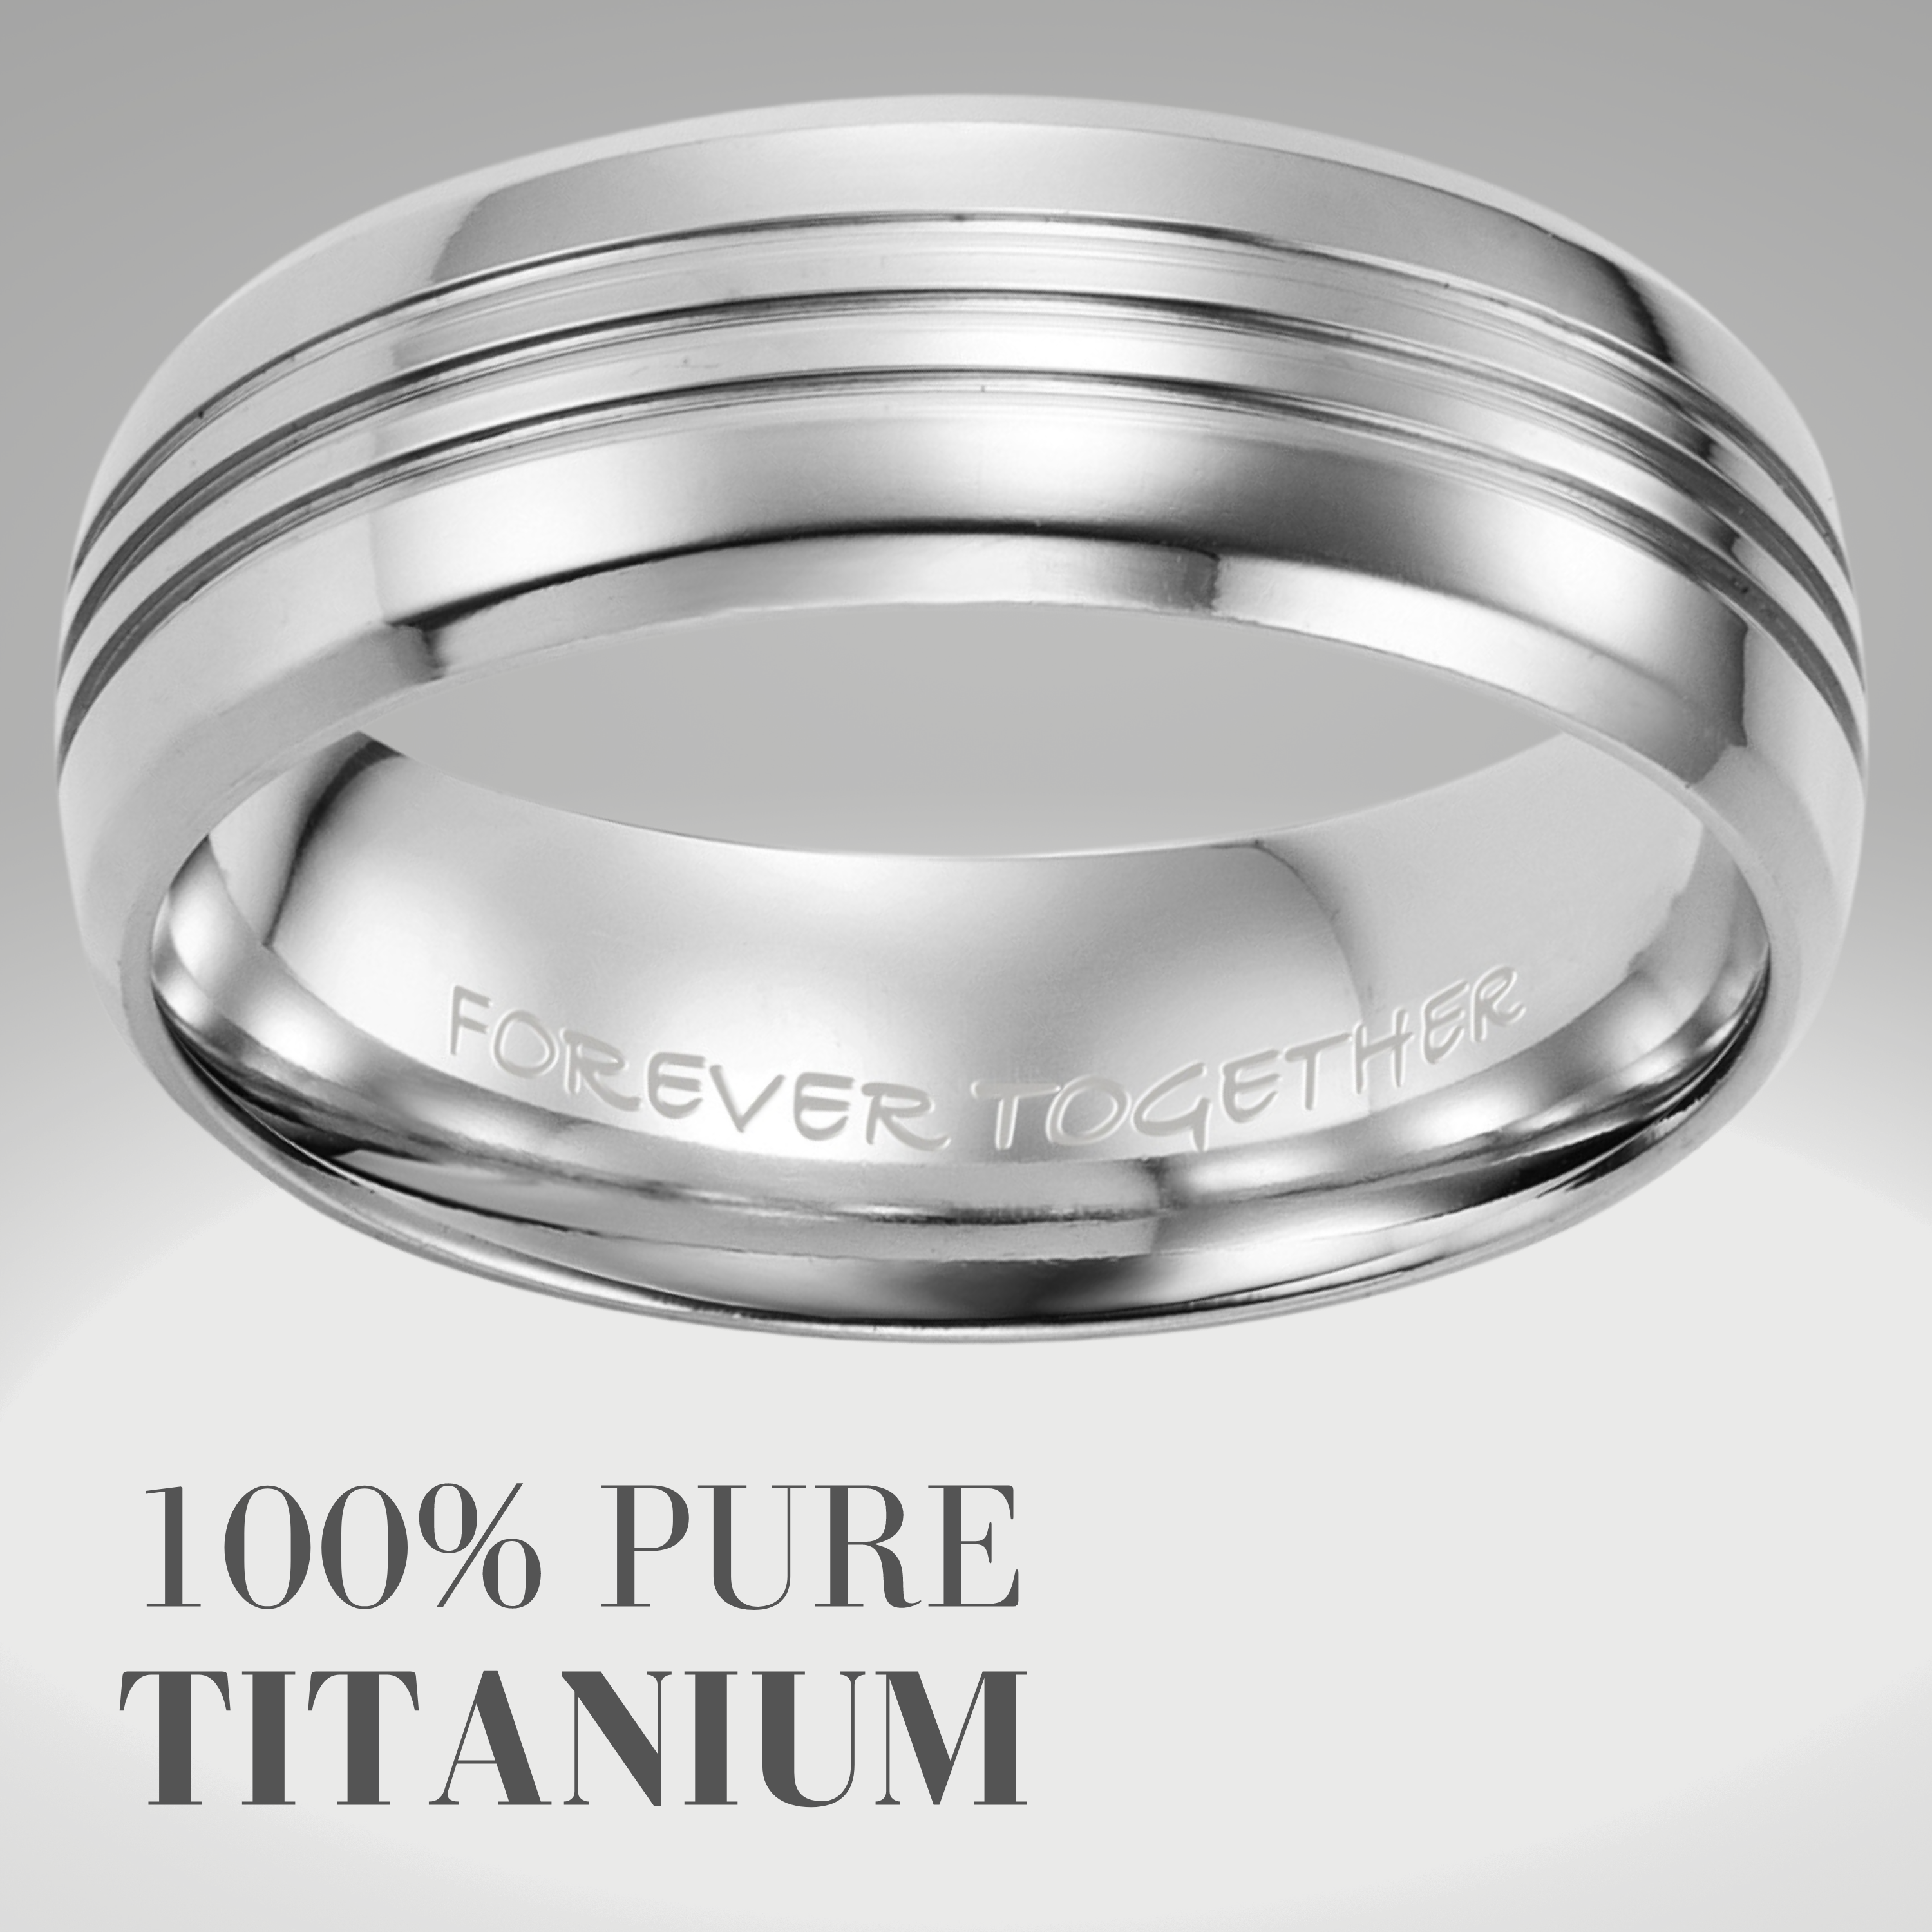 Mens Titanium Ring Etched Forever Together 8mm